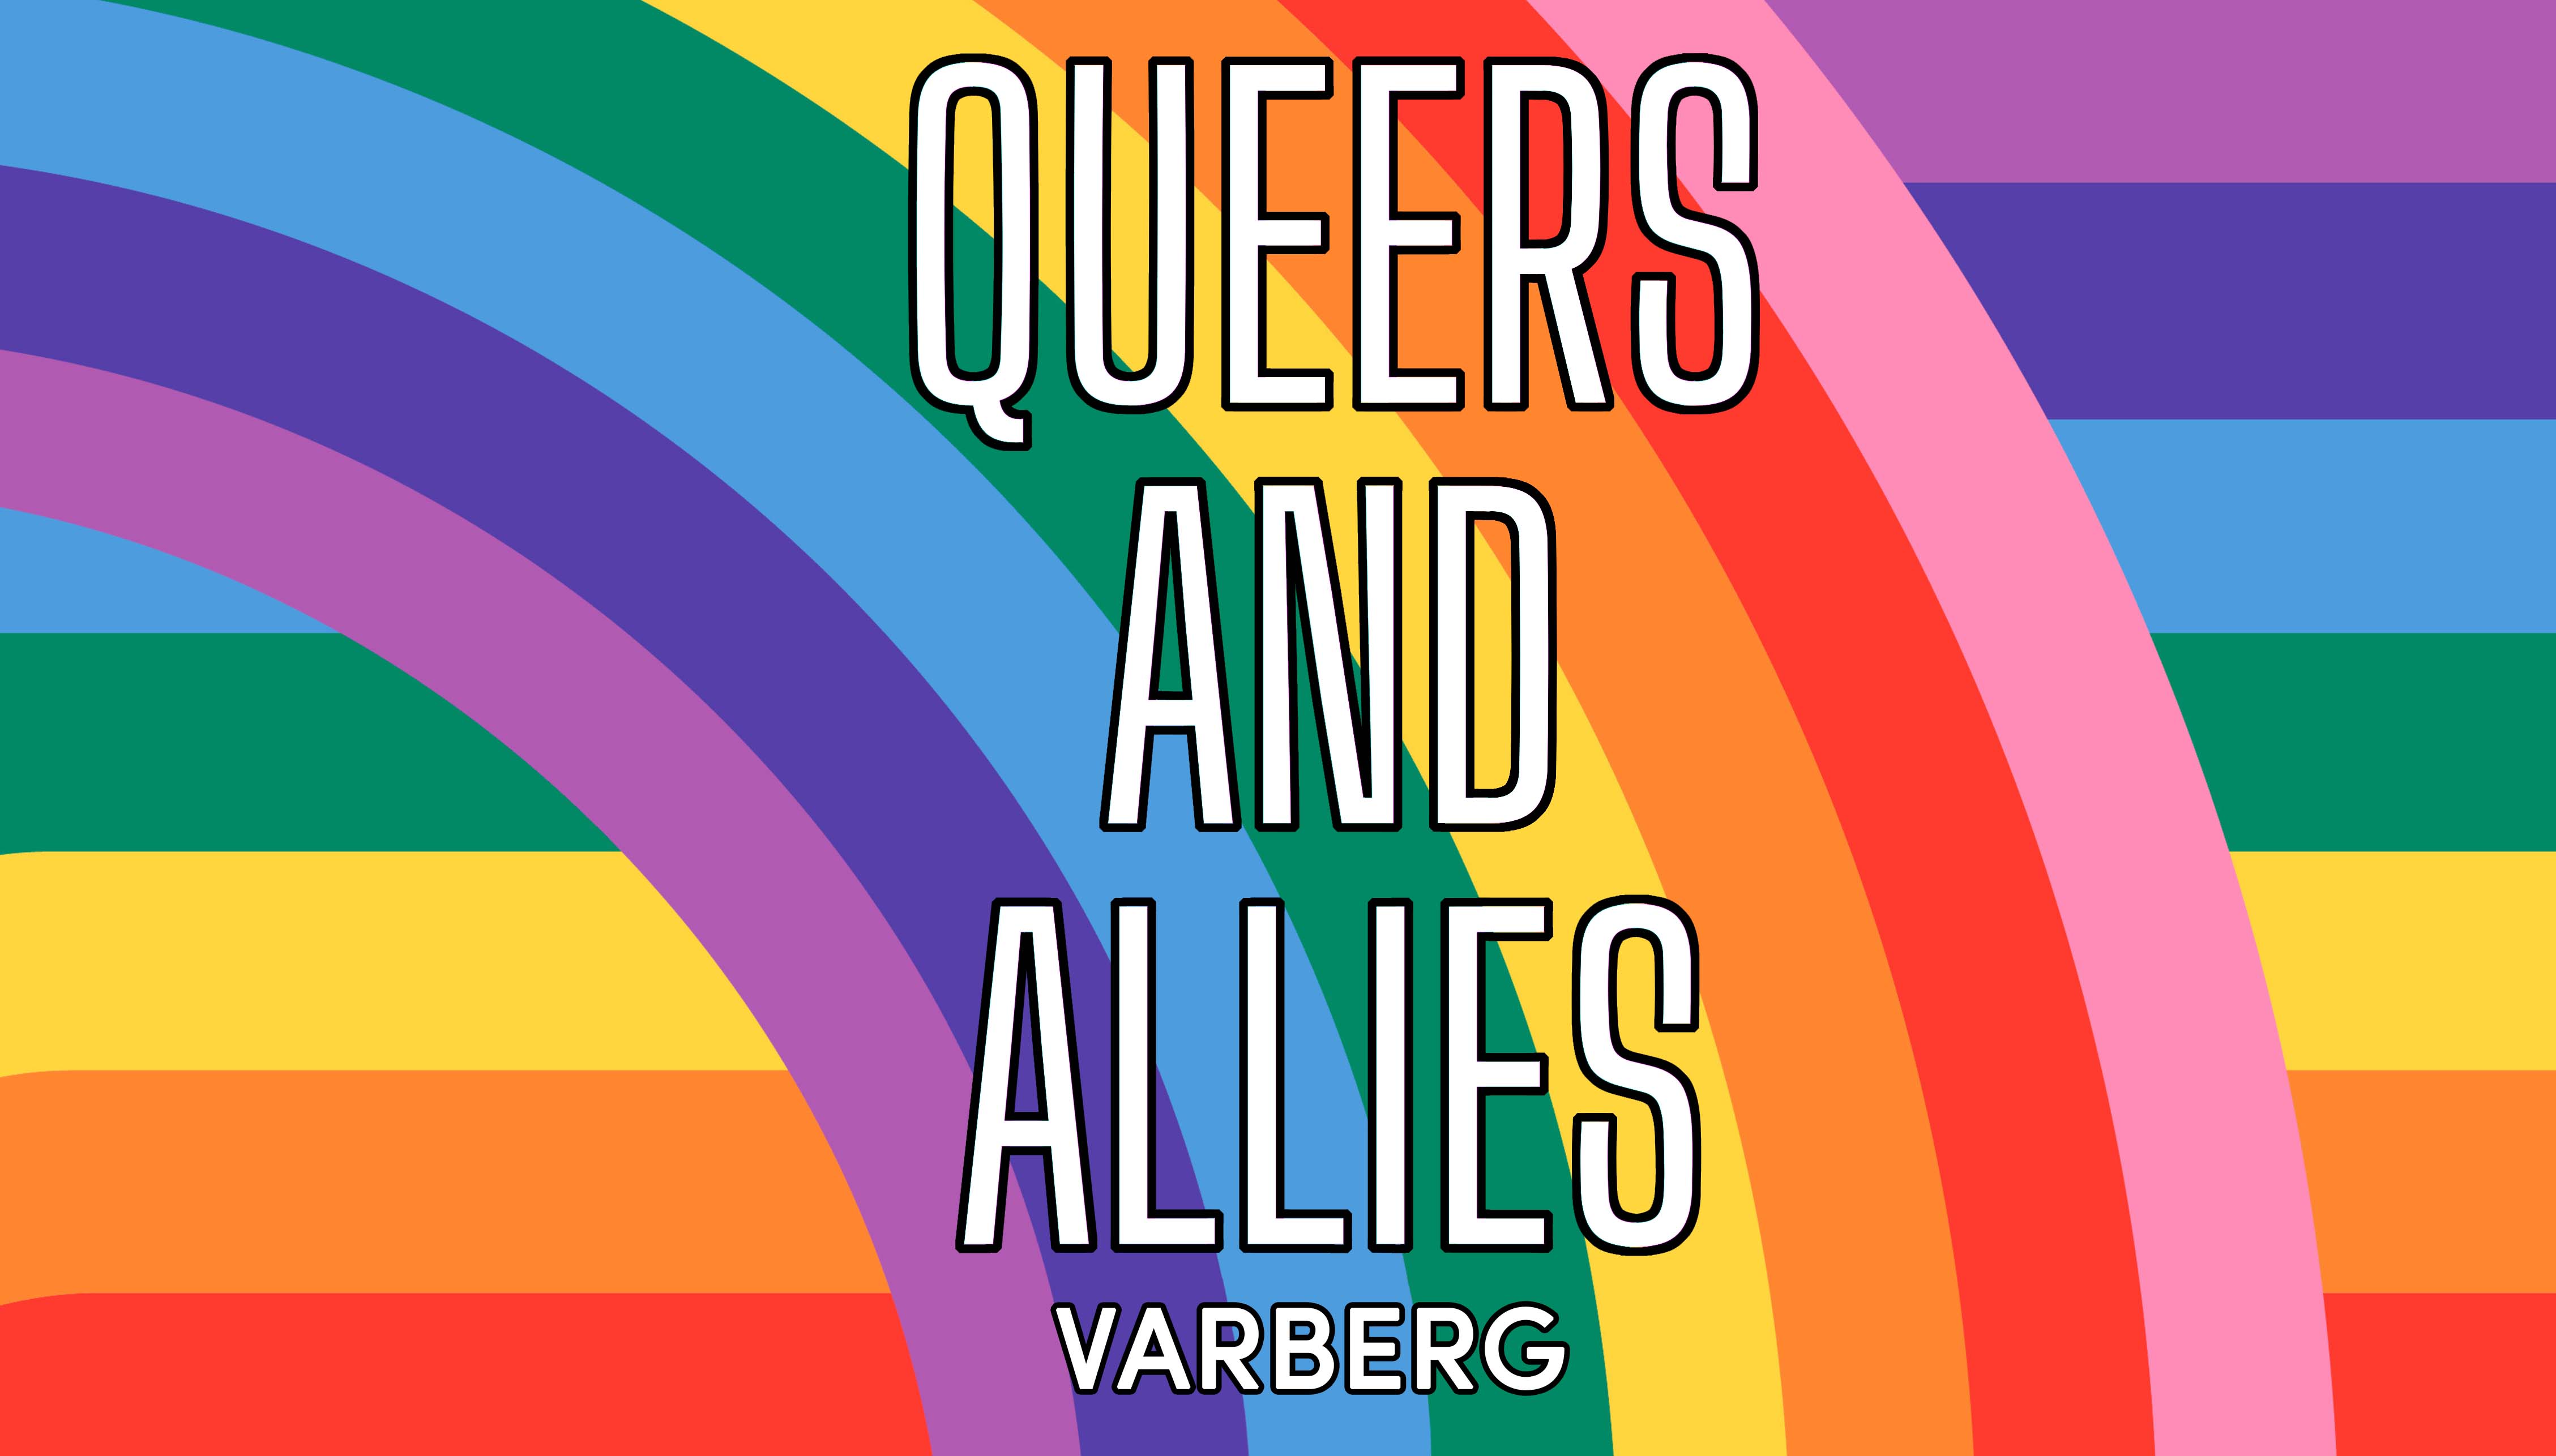 Bakgrund med regnbågsfärger. Text: Queers and allies